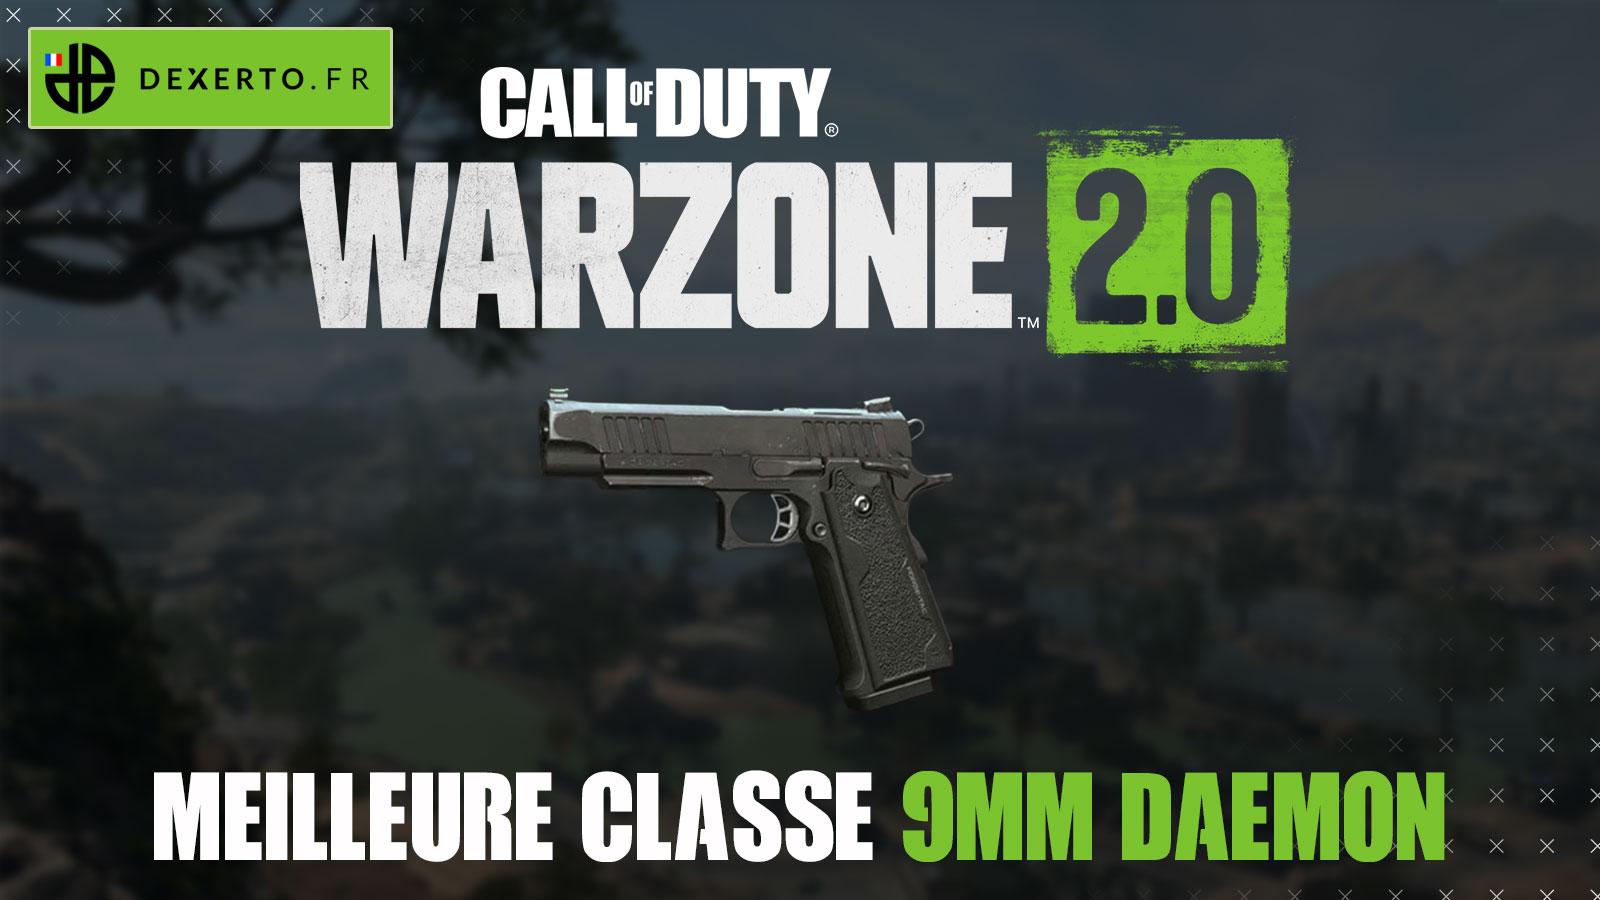 9mm Daemon classe Warzone